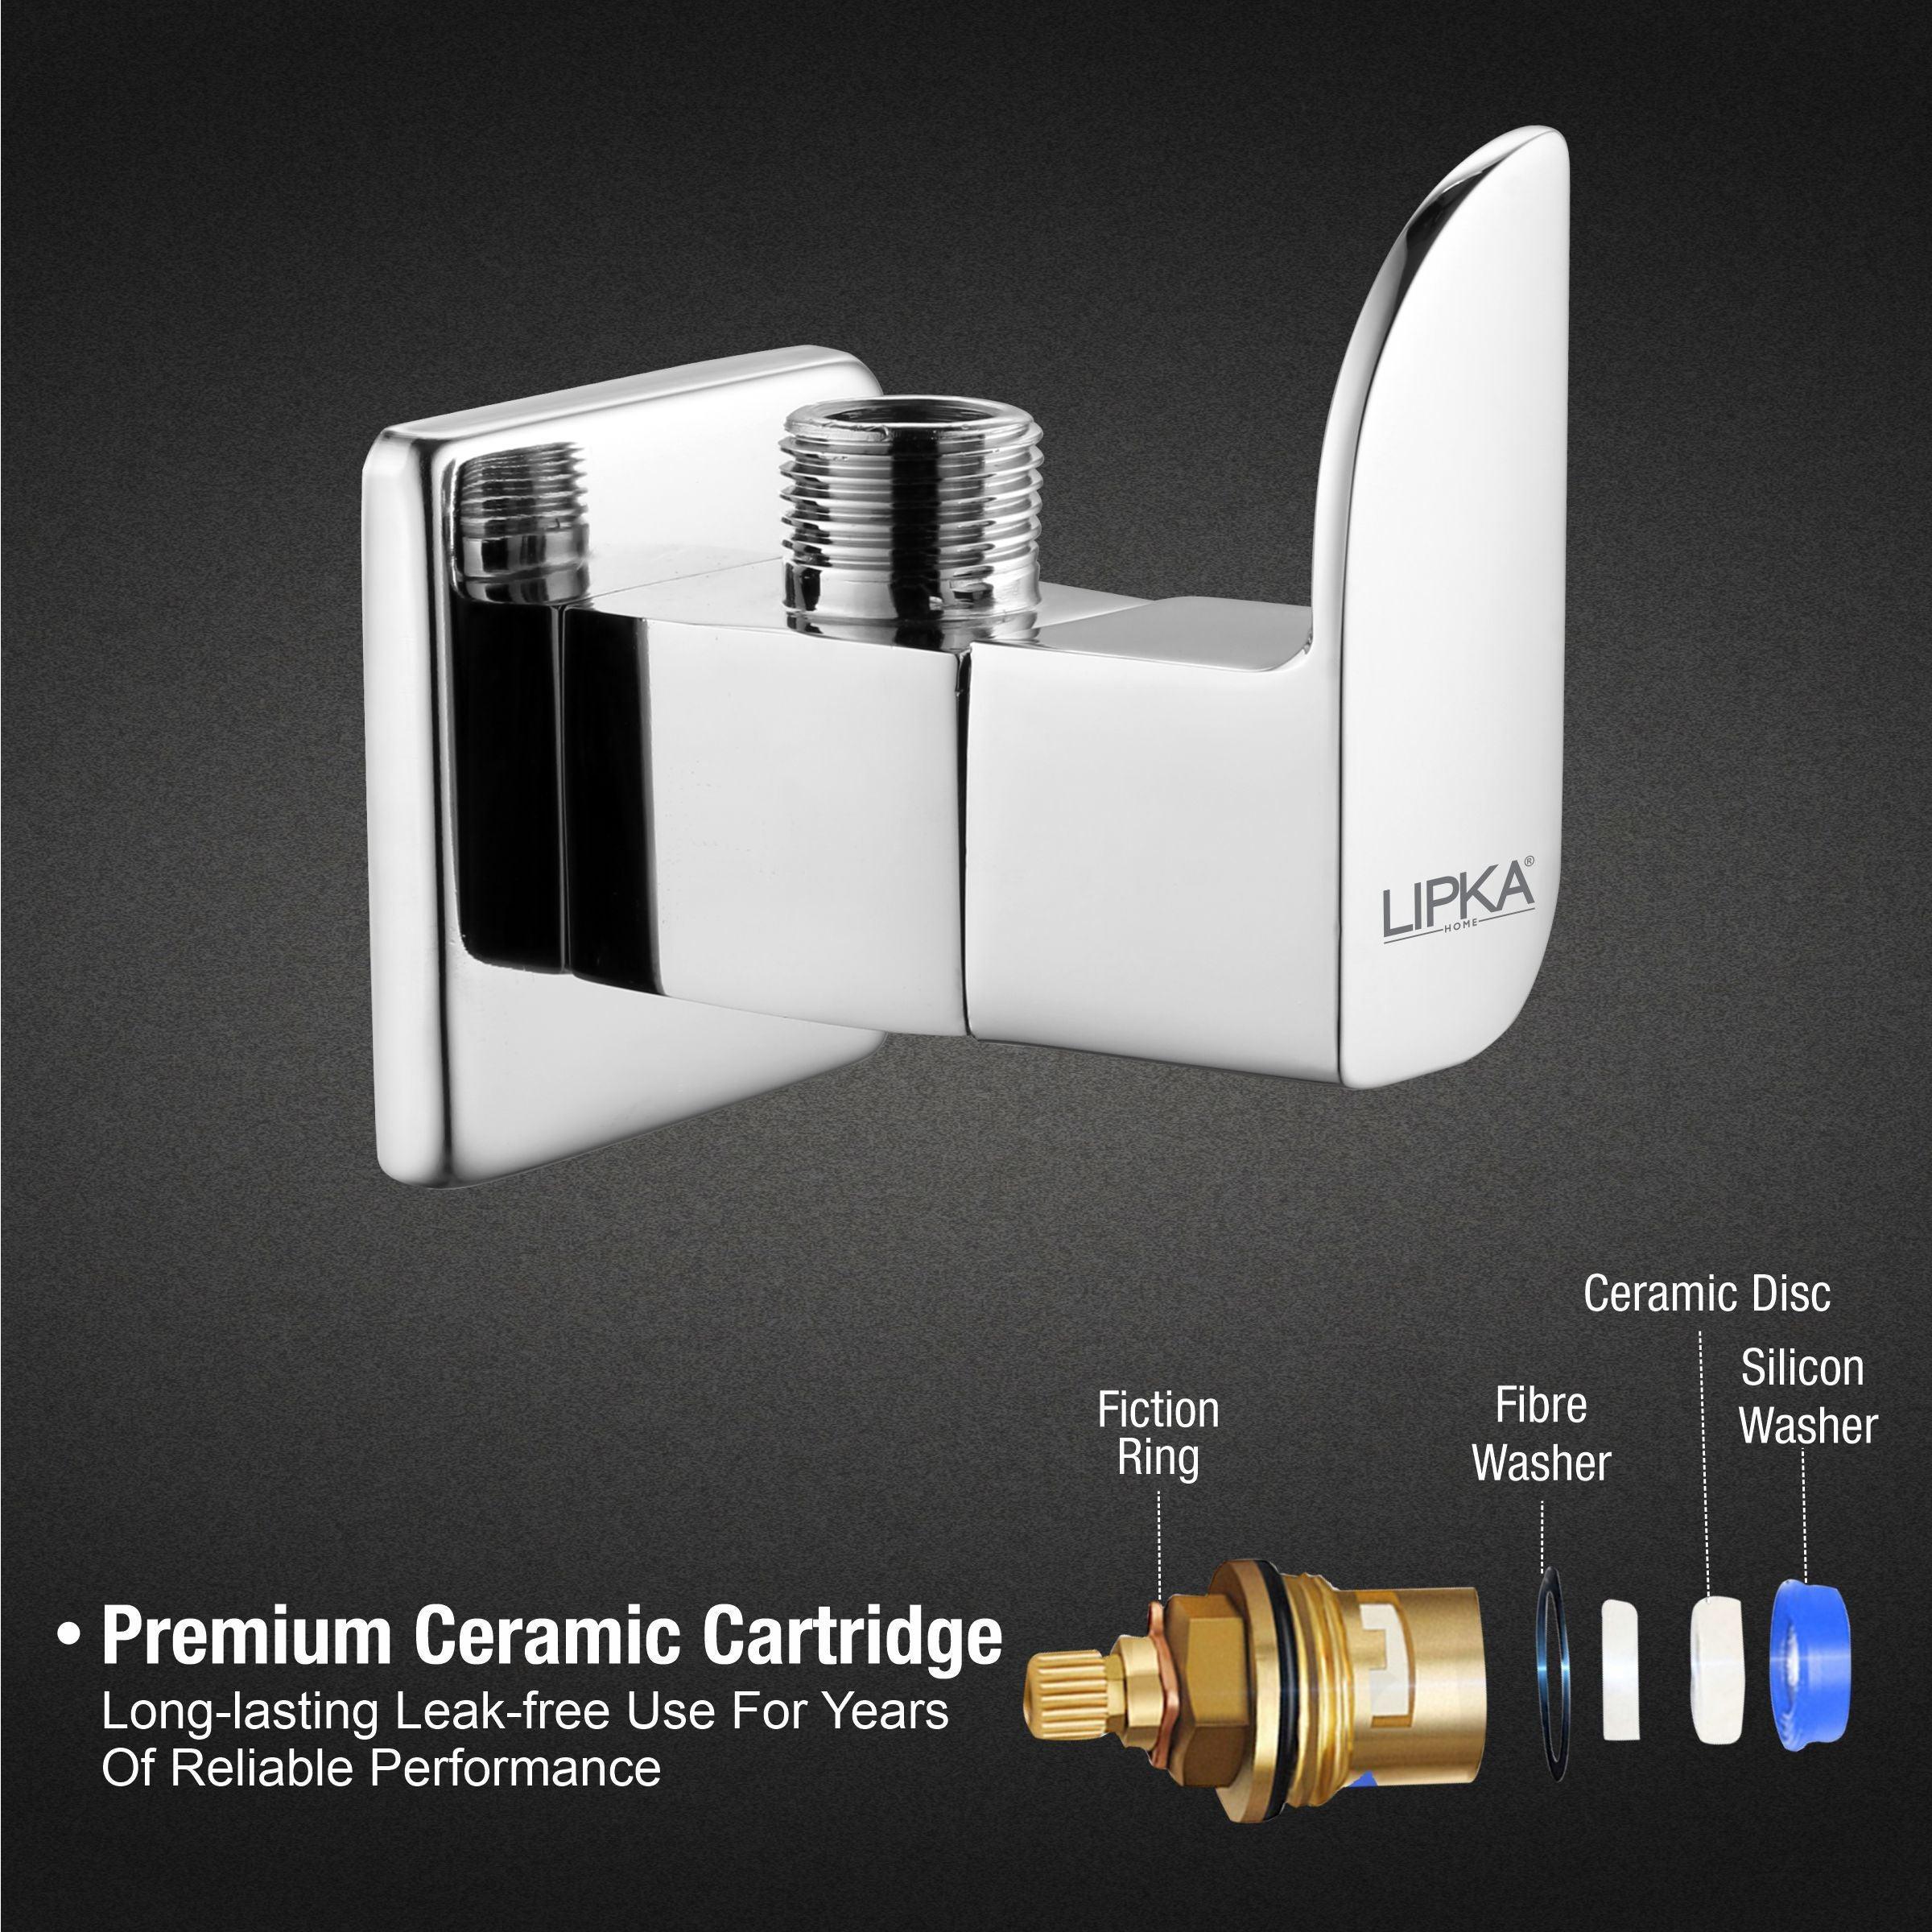 Arise Angle Valve Brass Faucet - LIPKA - Lipka Home